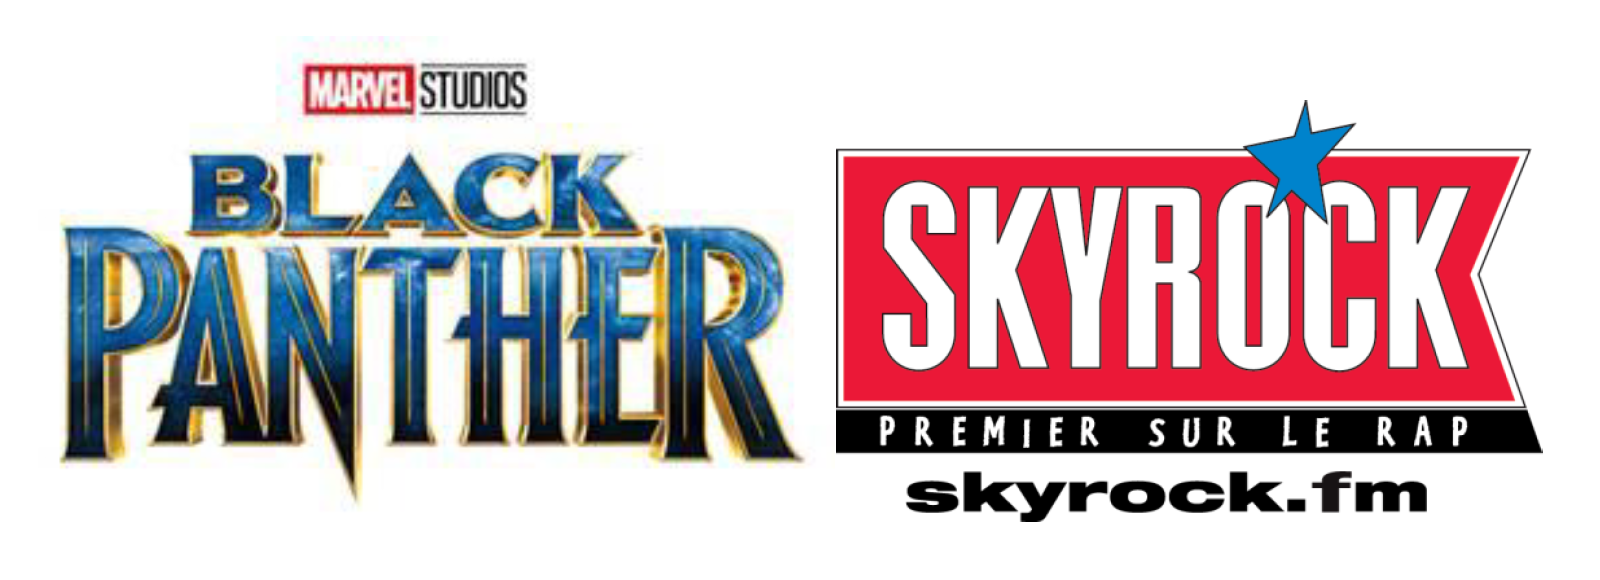 Skyrock partenaire du film Black Panther